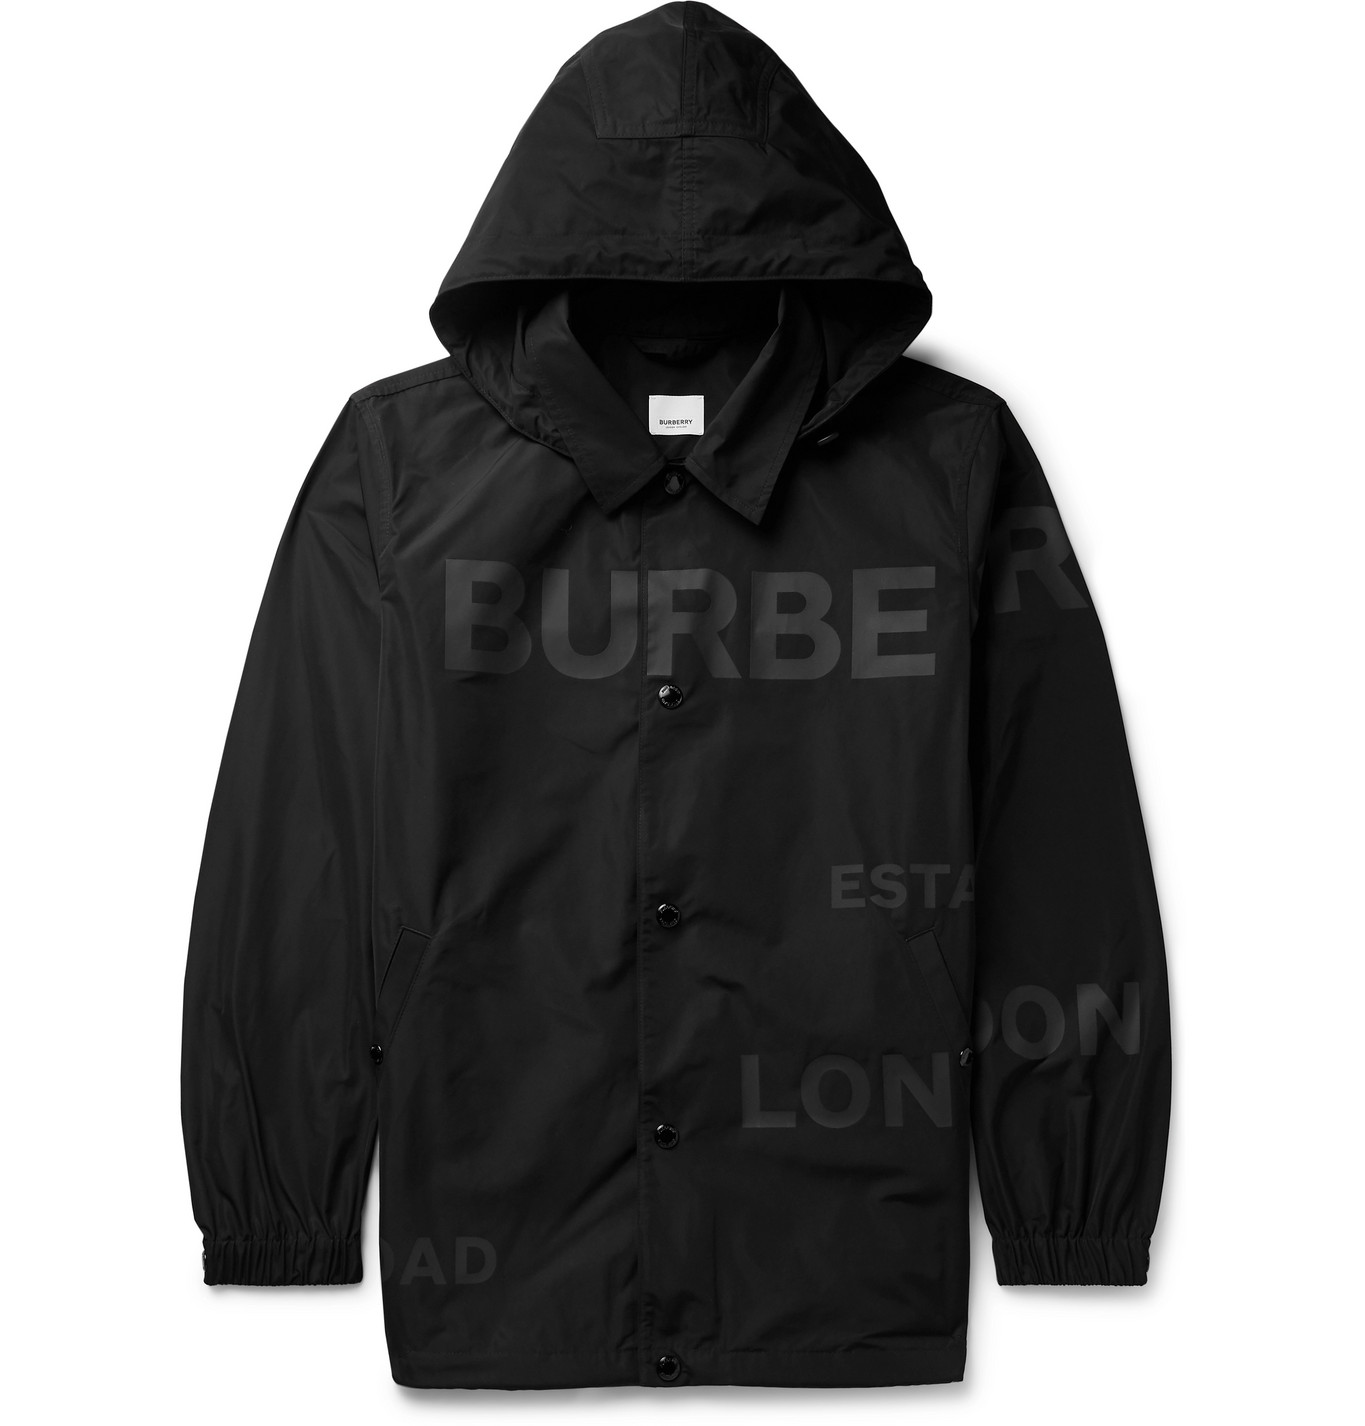 burberry black jacket mens